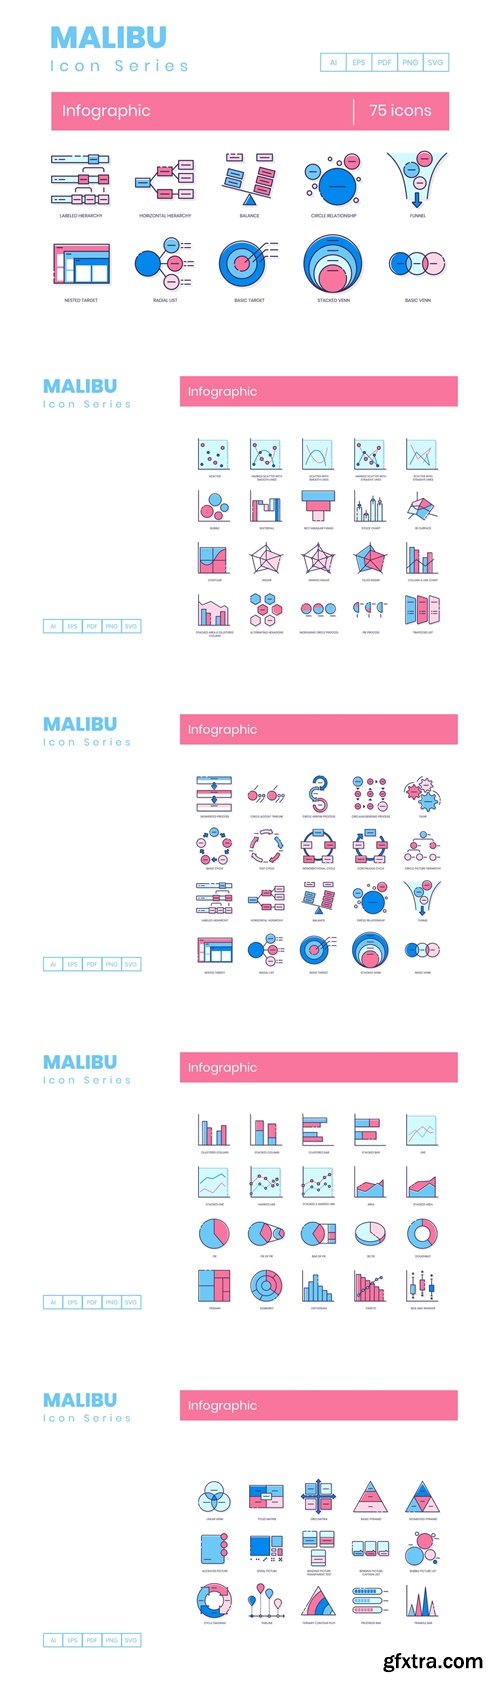 75 Infographic Icons | Malibu Series